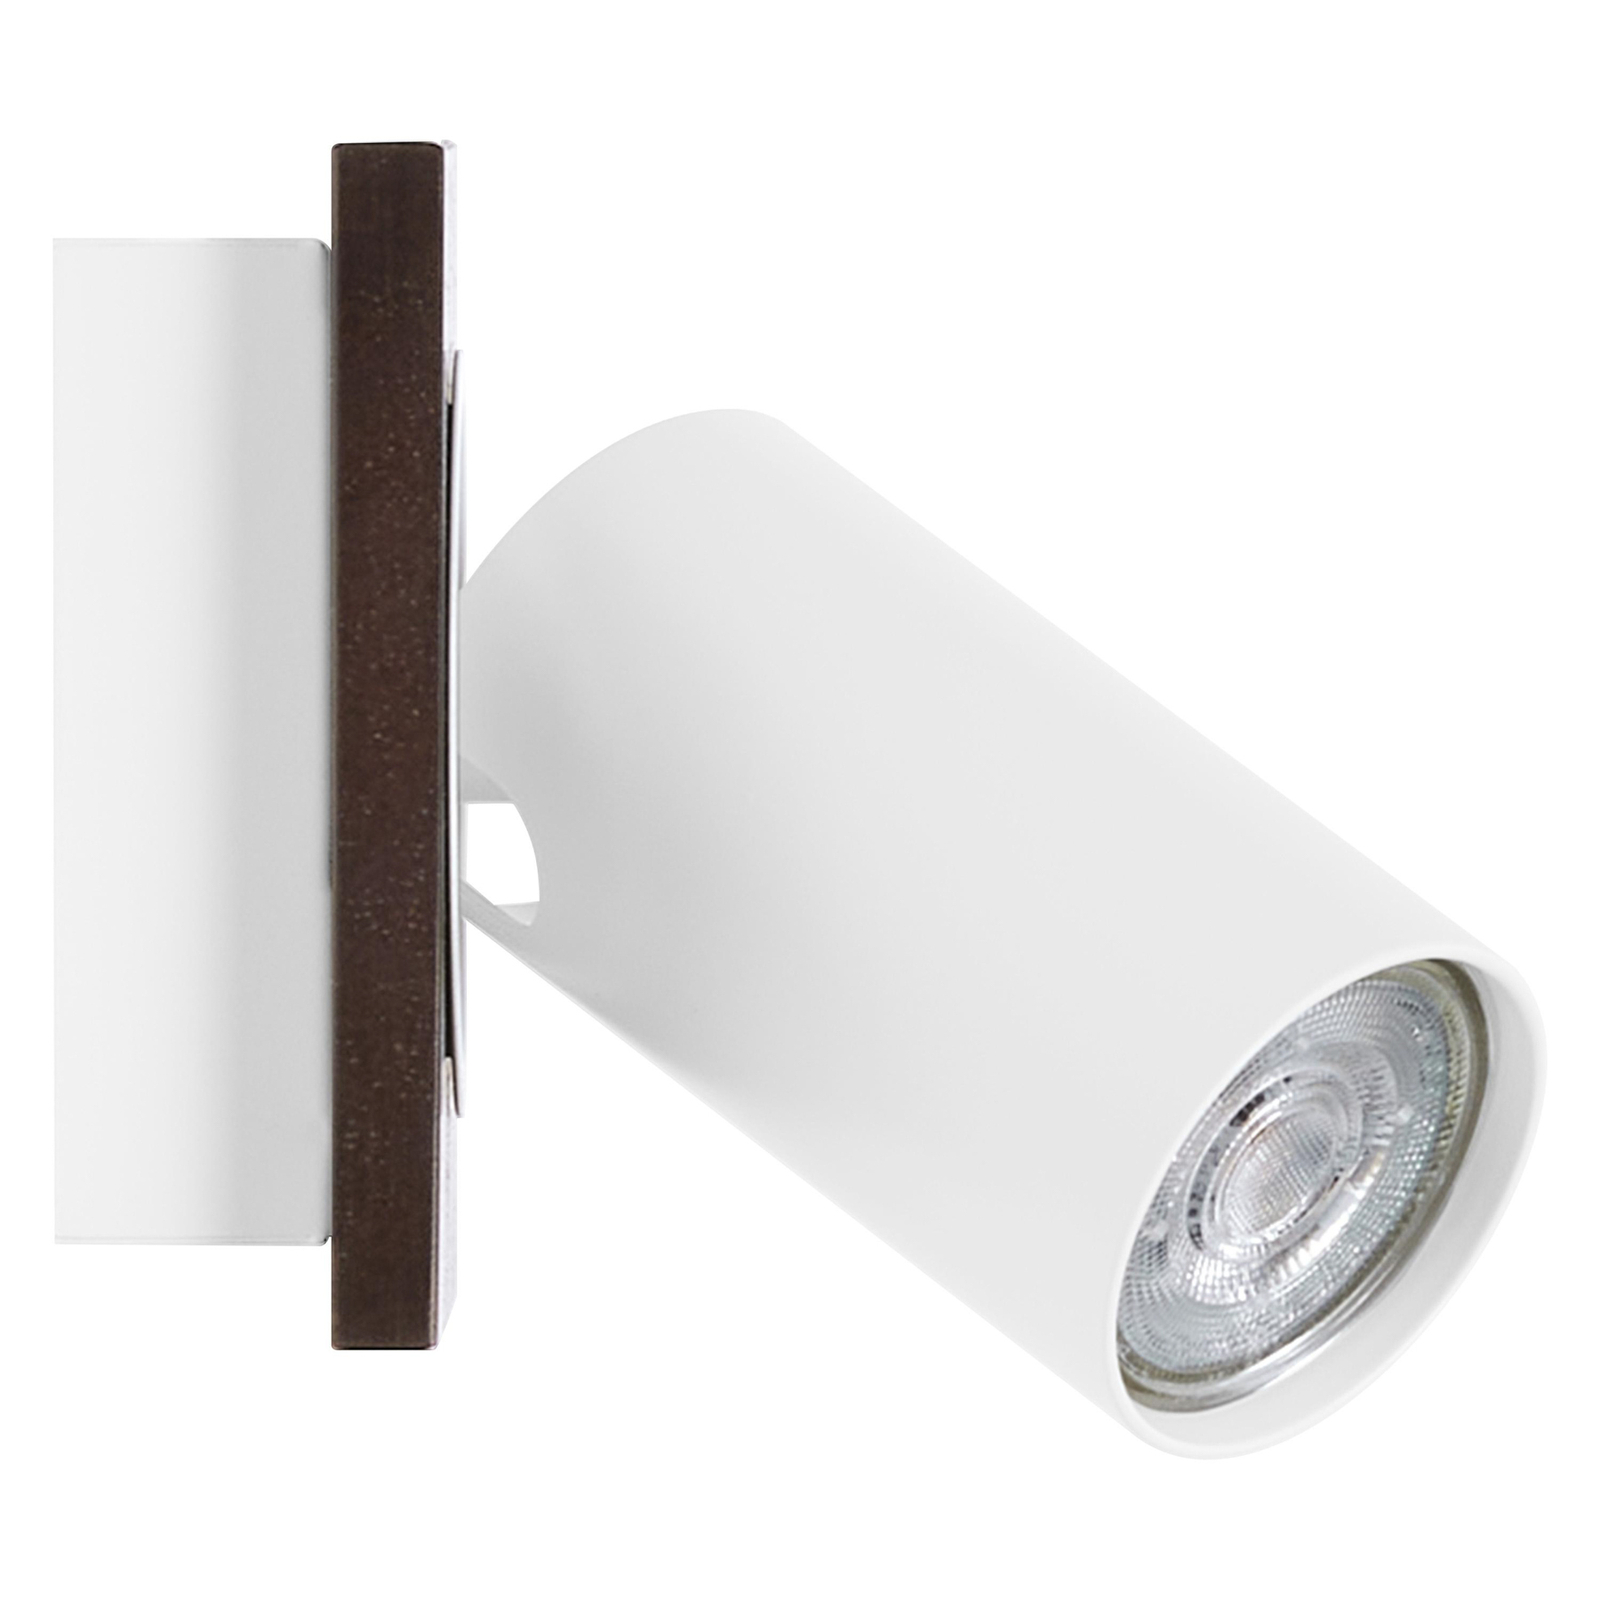 LEDVANCE LED wall spotlight Mercury GU10, wood/white